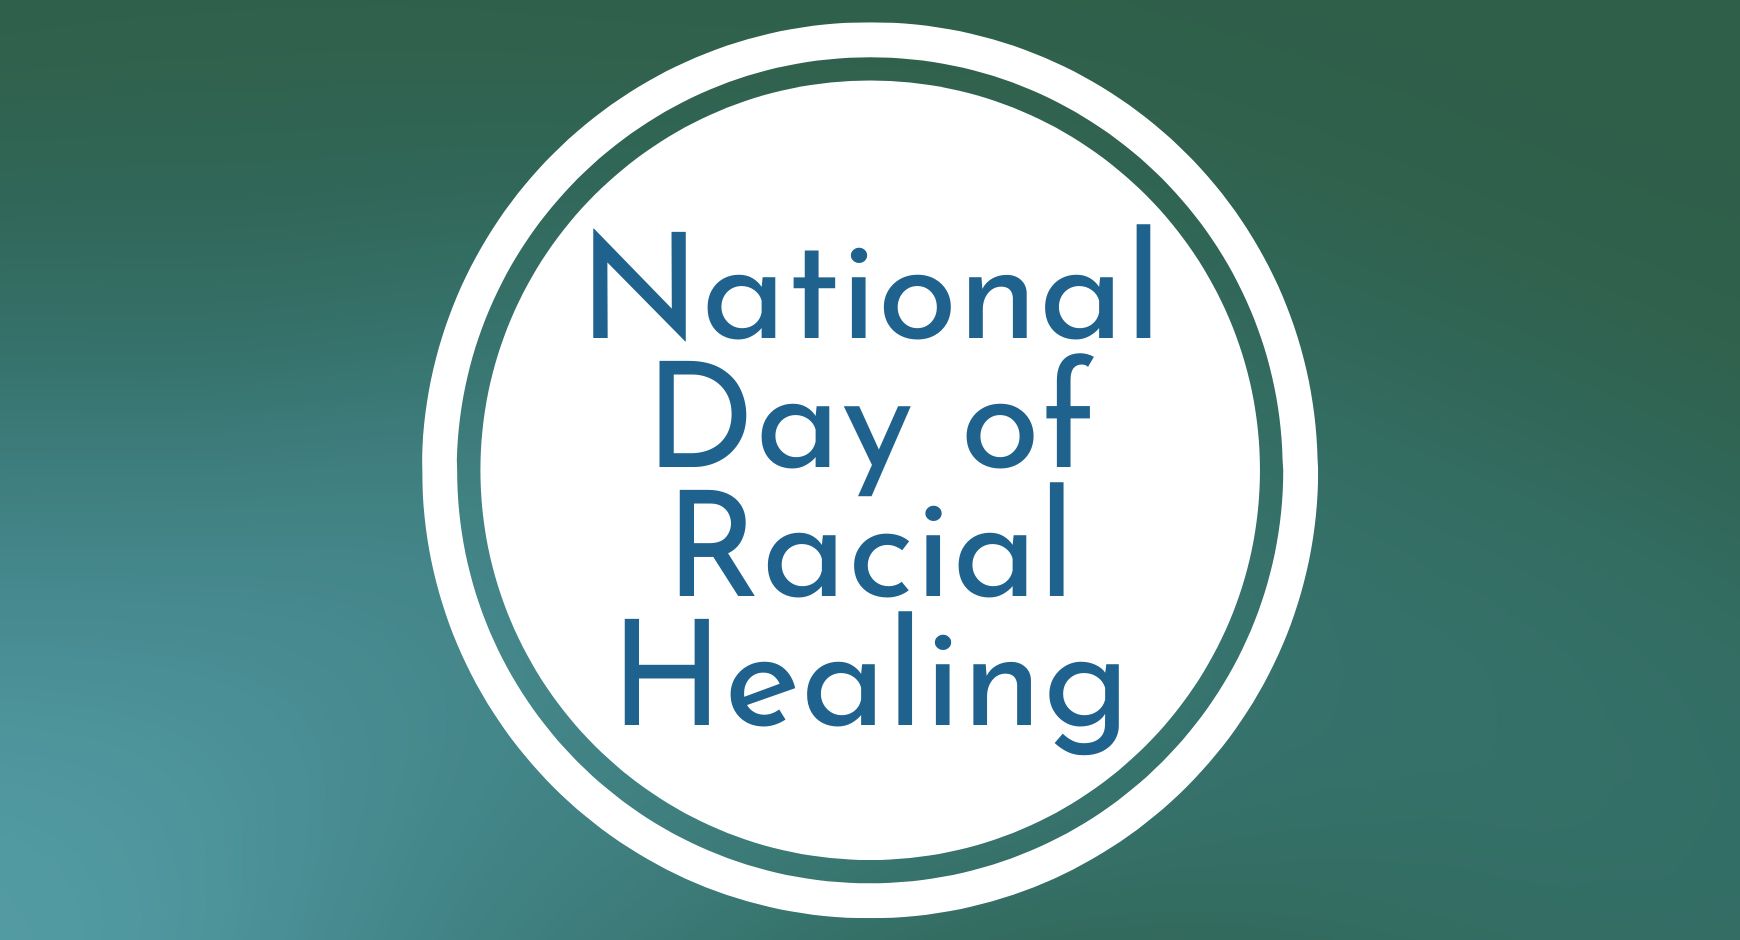 National Day of Racial Healing Employee Assistance Program (EAP)